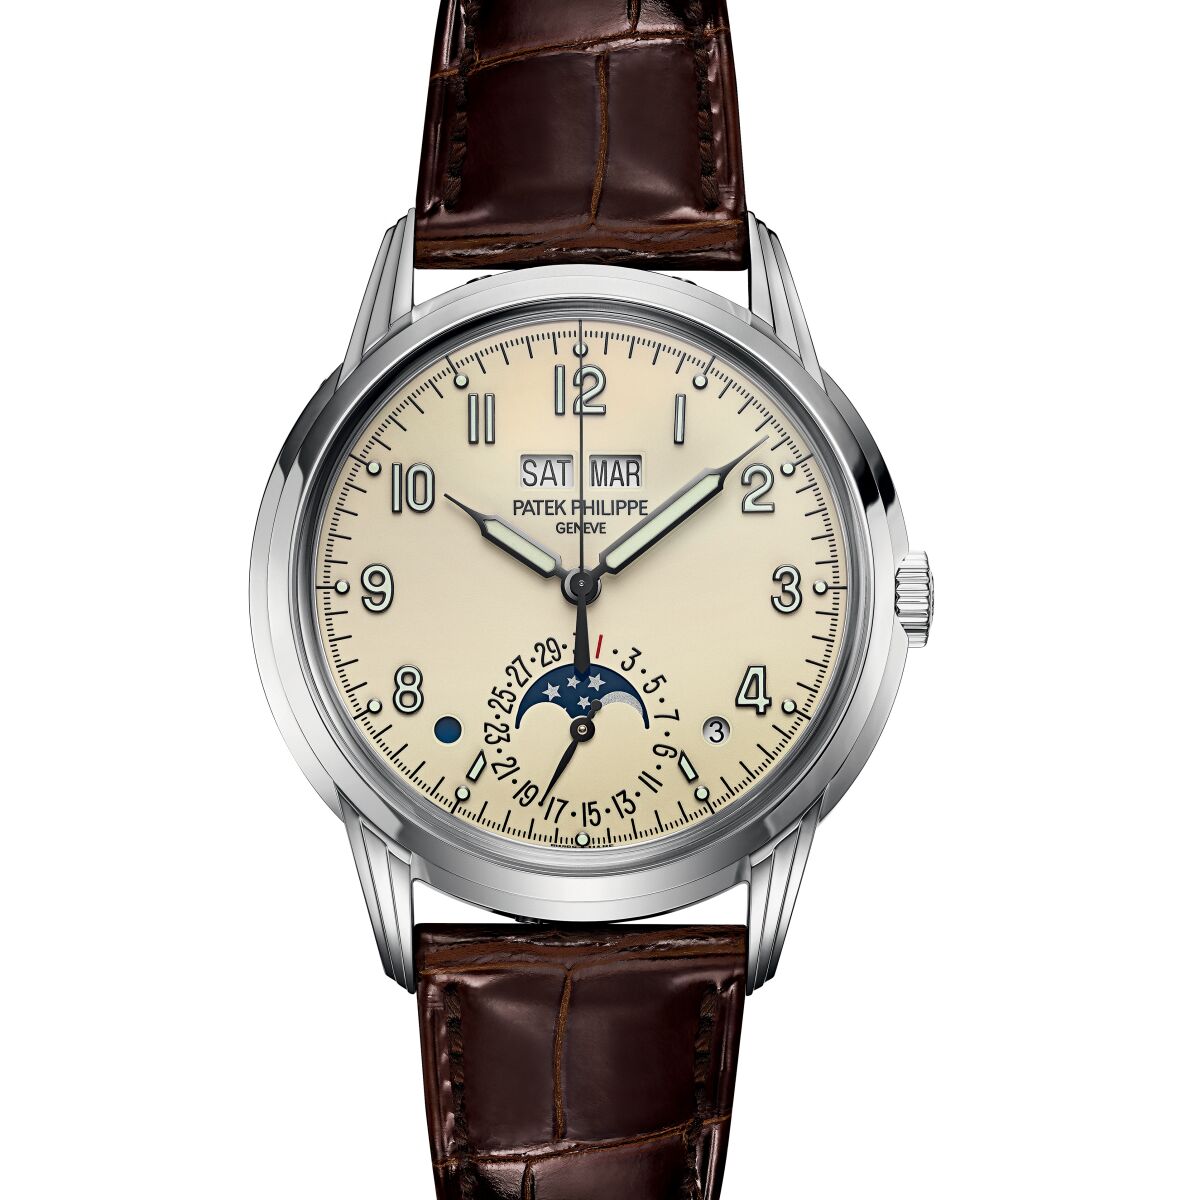 A photo of Patek Philippe's Men's Perpetual Calendar watch in white gold.